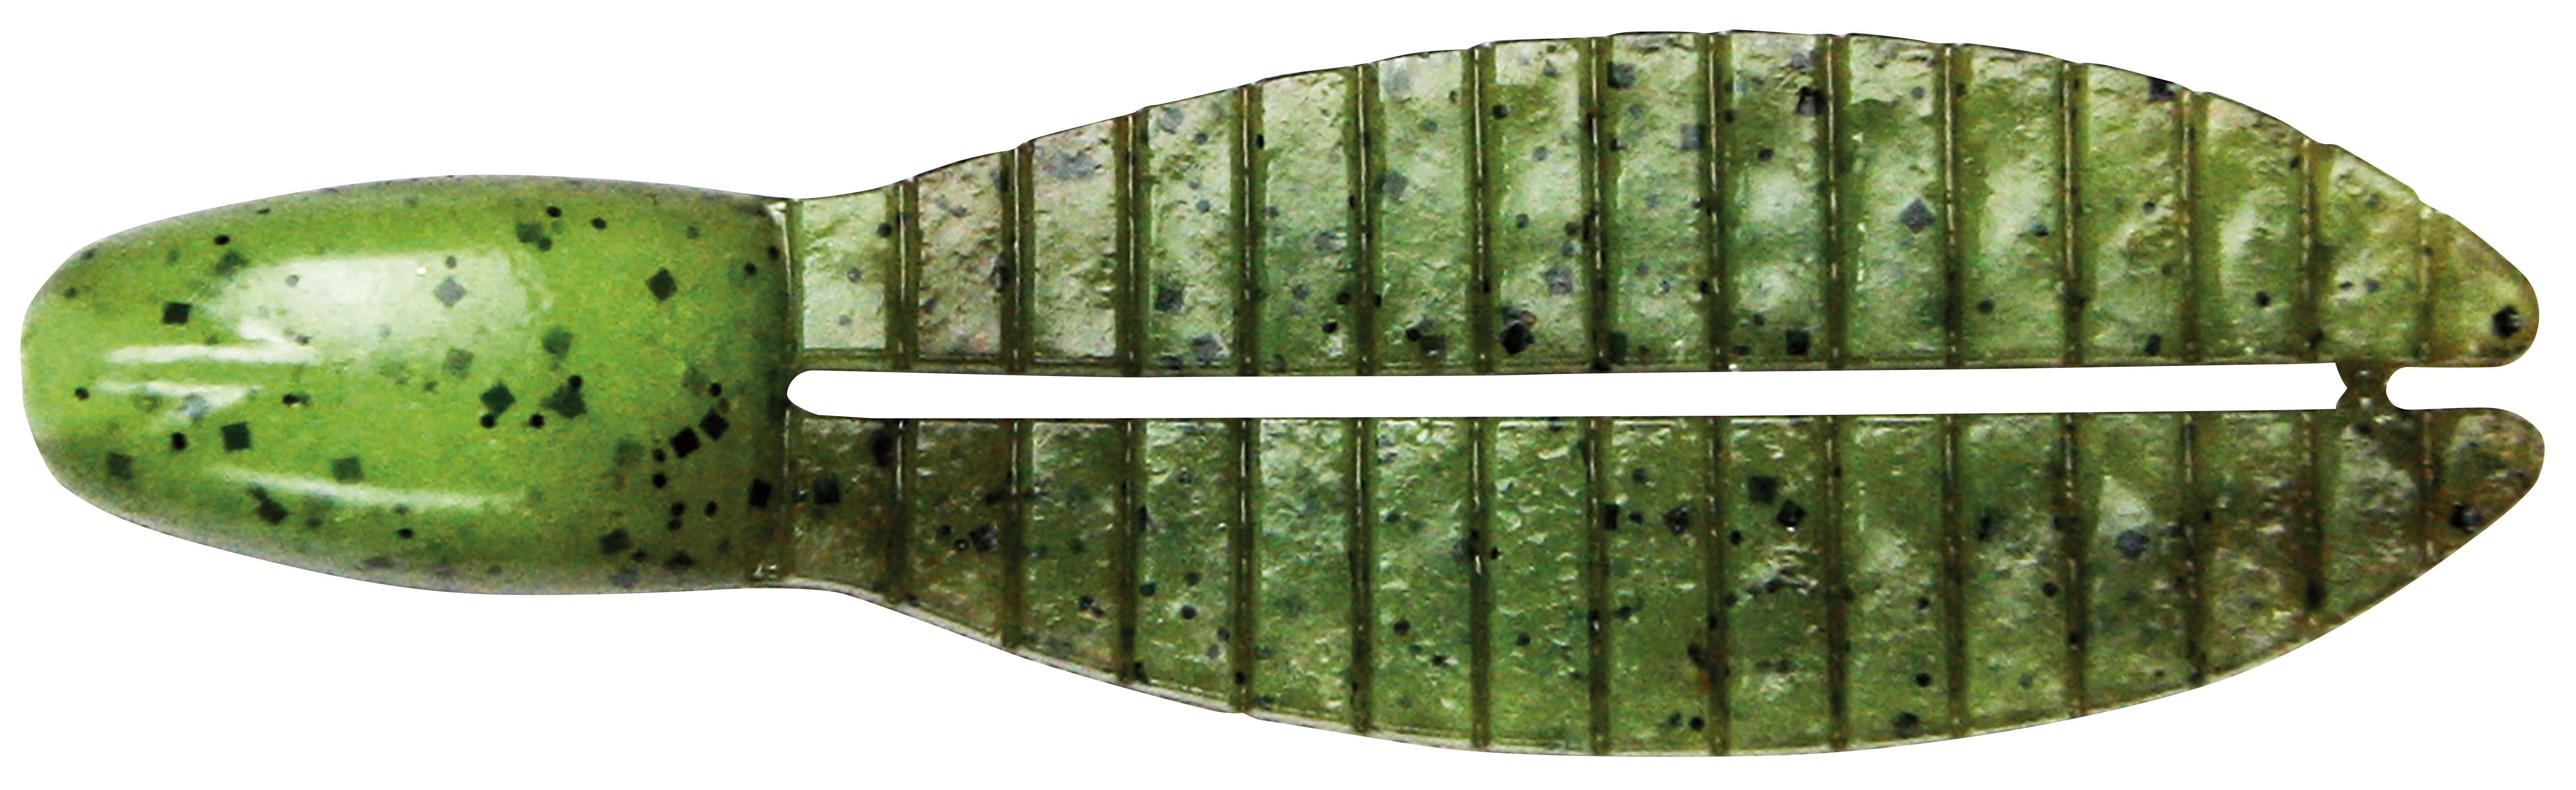 Keitech Flex Chunk Medium 3 inch (7,6cm) - 401-Green Pumpkin Chartreuse Under